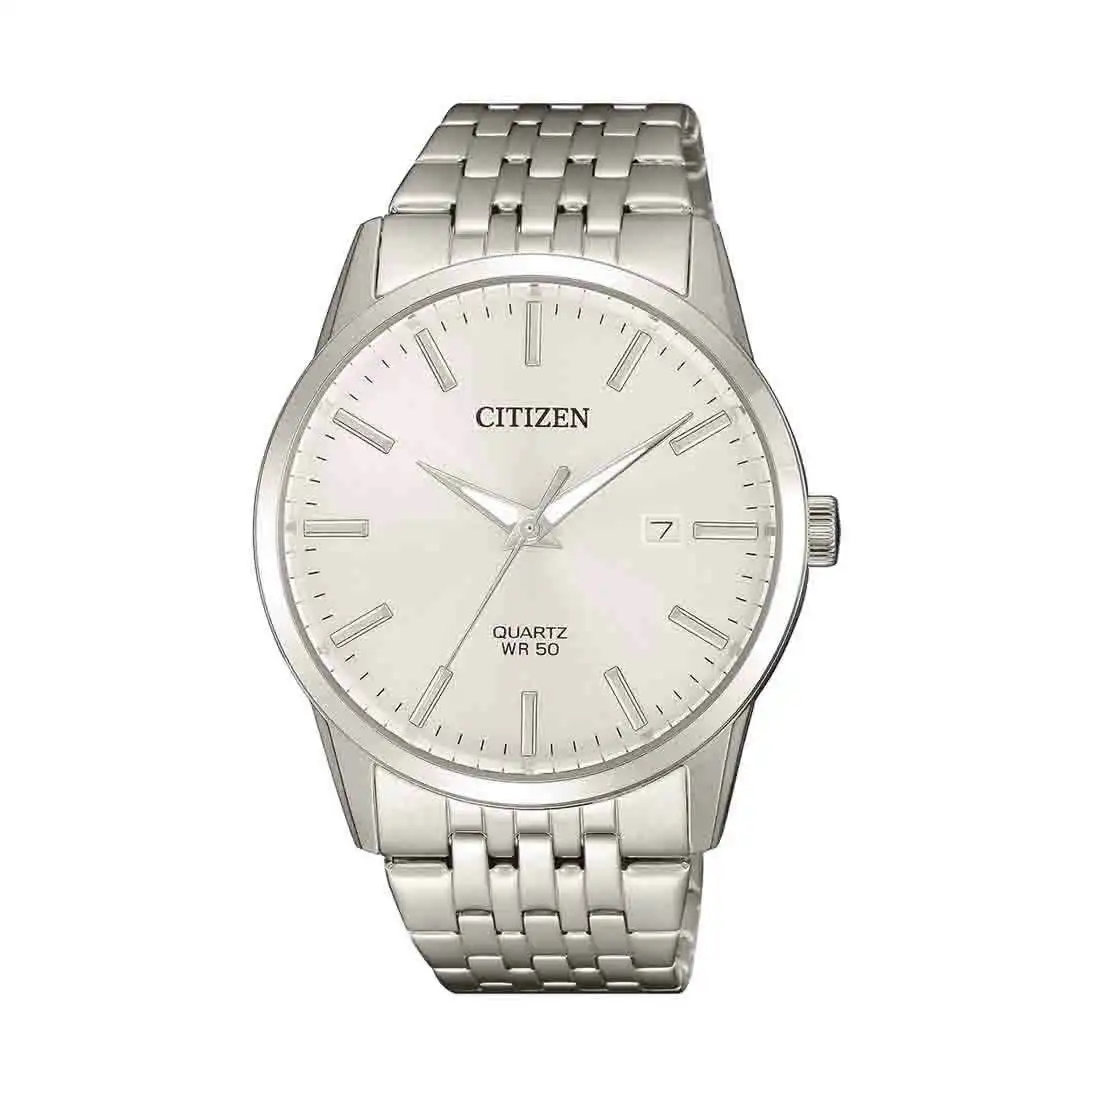 Citizen Men's Silver Stainless-Steel White Face Watch Model BI5000-87A